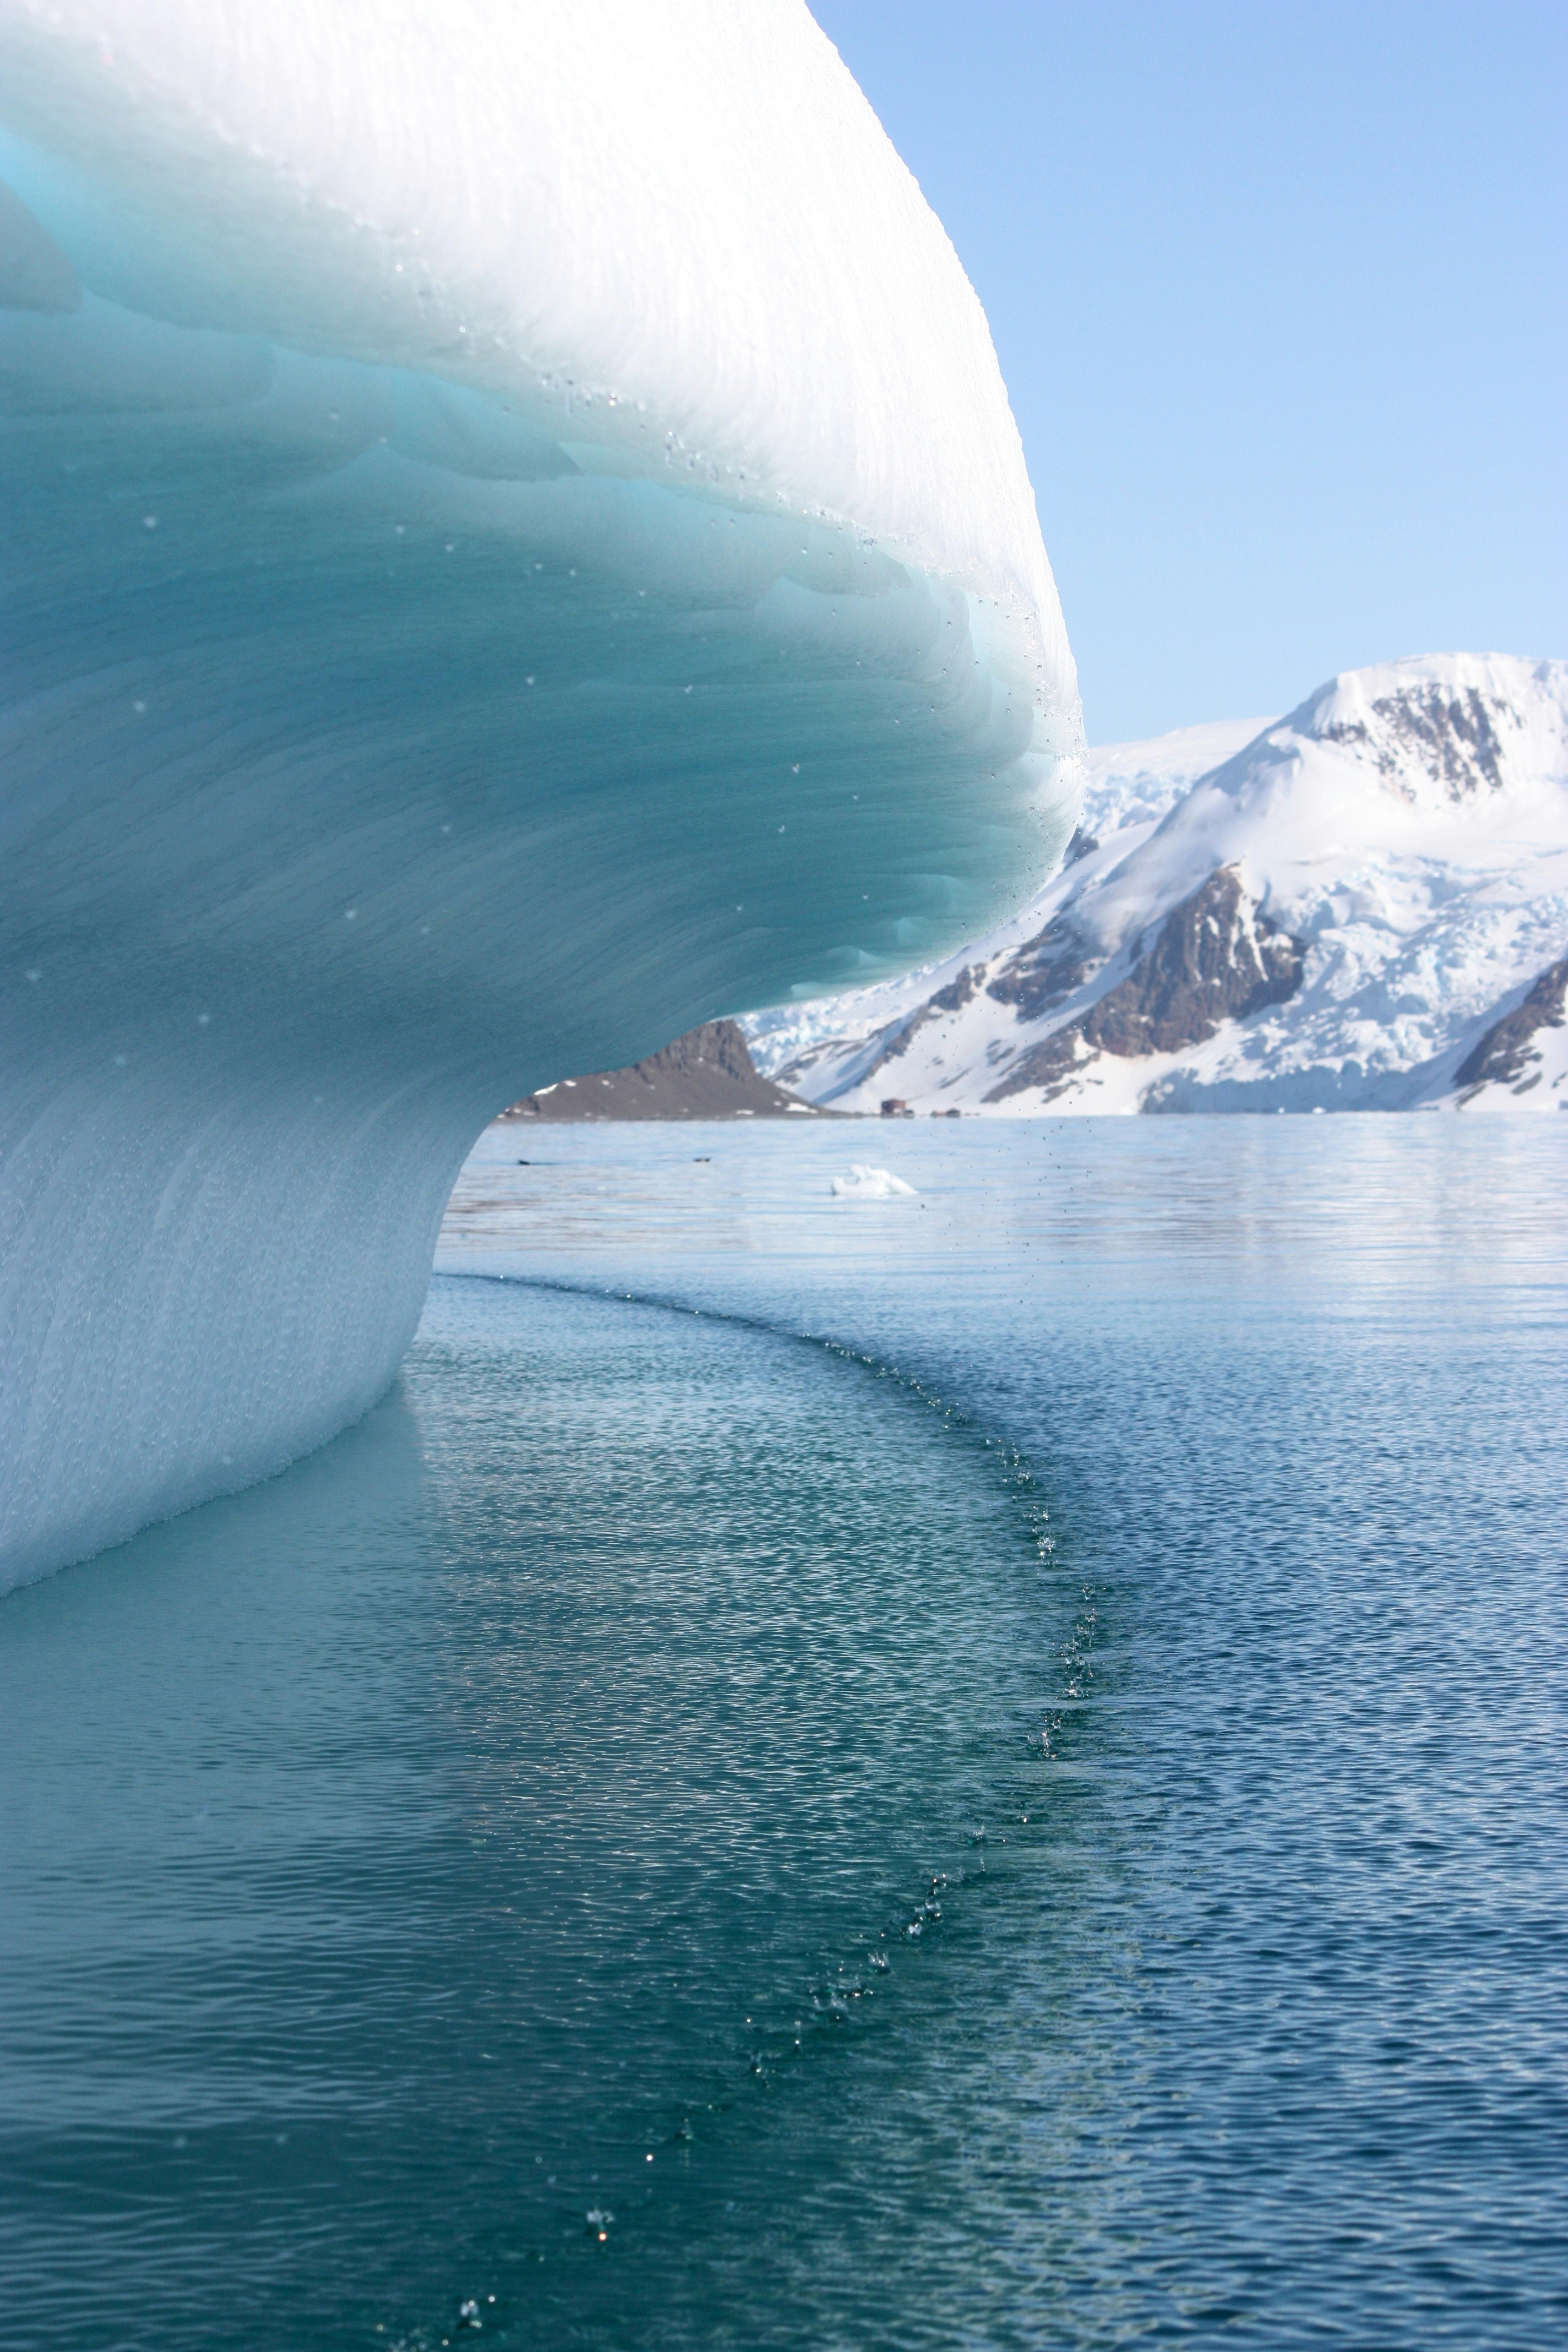 The edge of an iceberg, melting in the Austral summer.